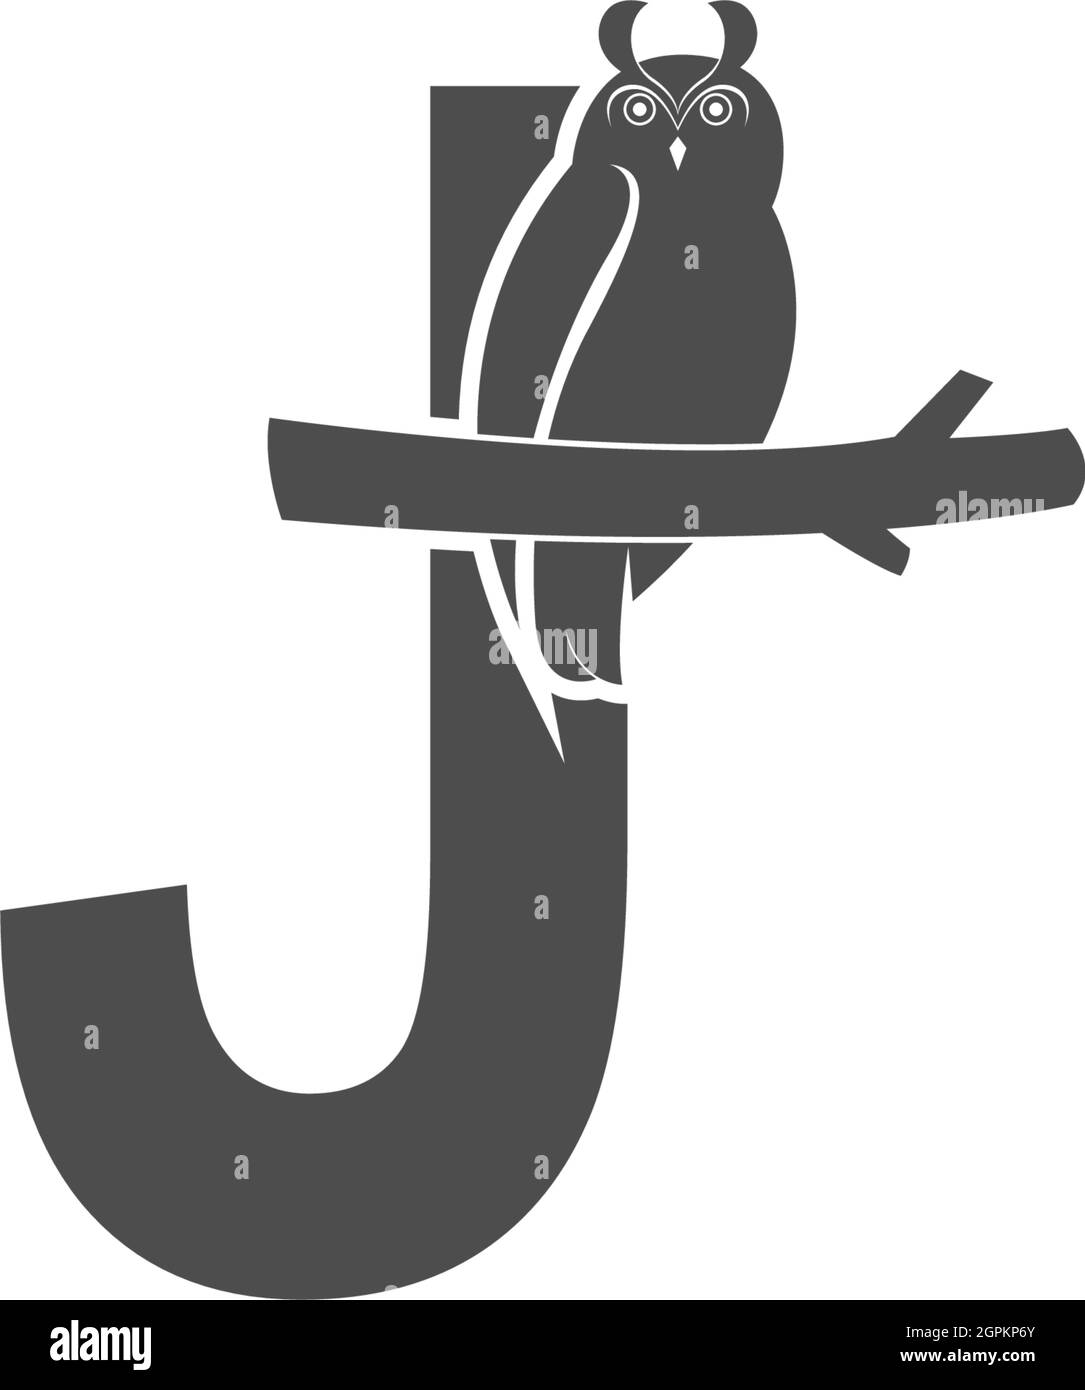 J is for Jaguar Nature Animal Alphabet Vintage Style Night Light